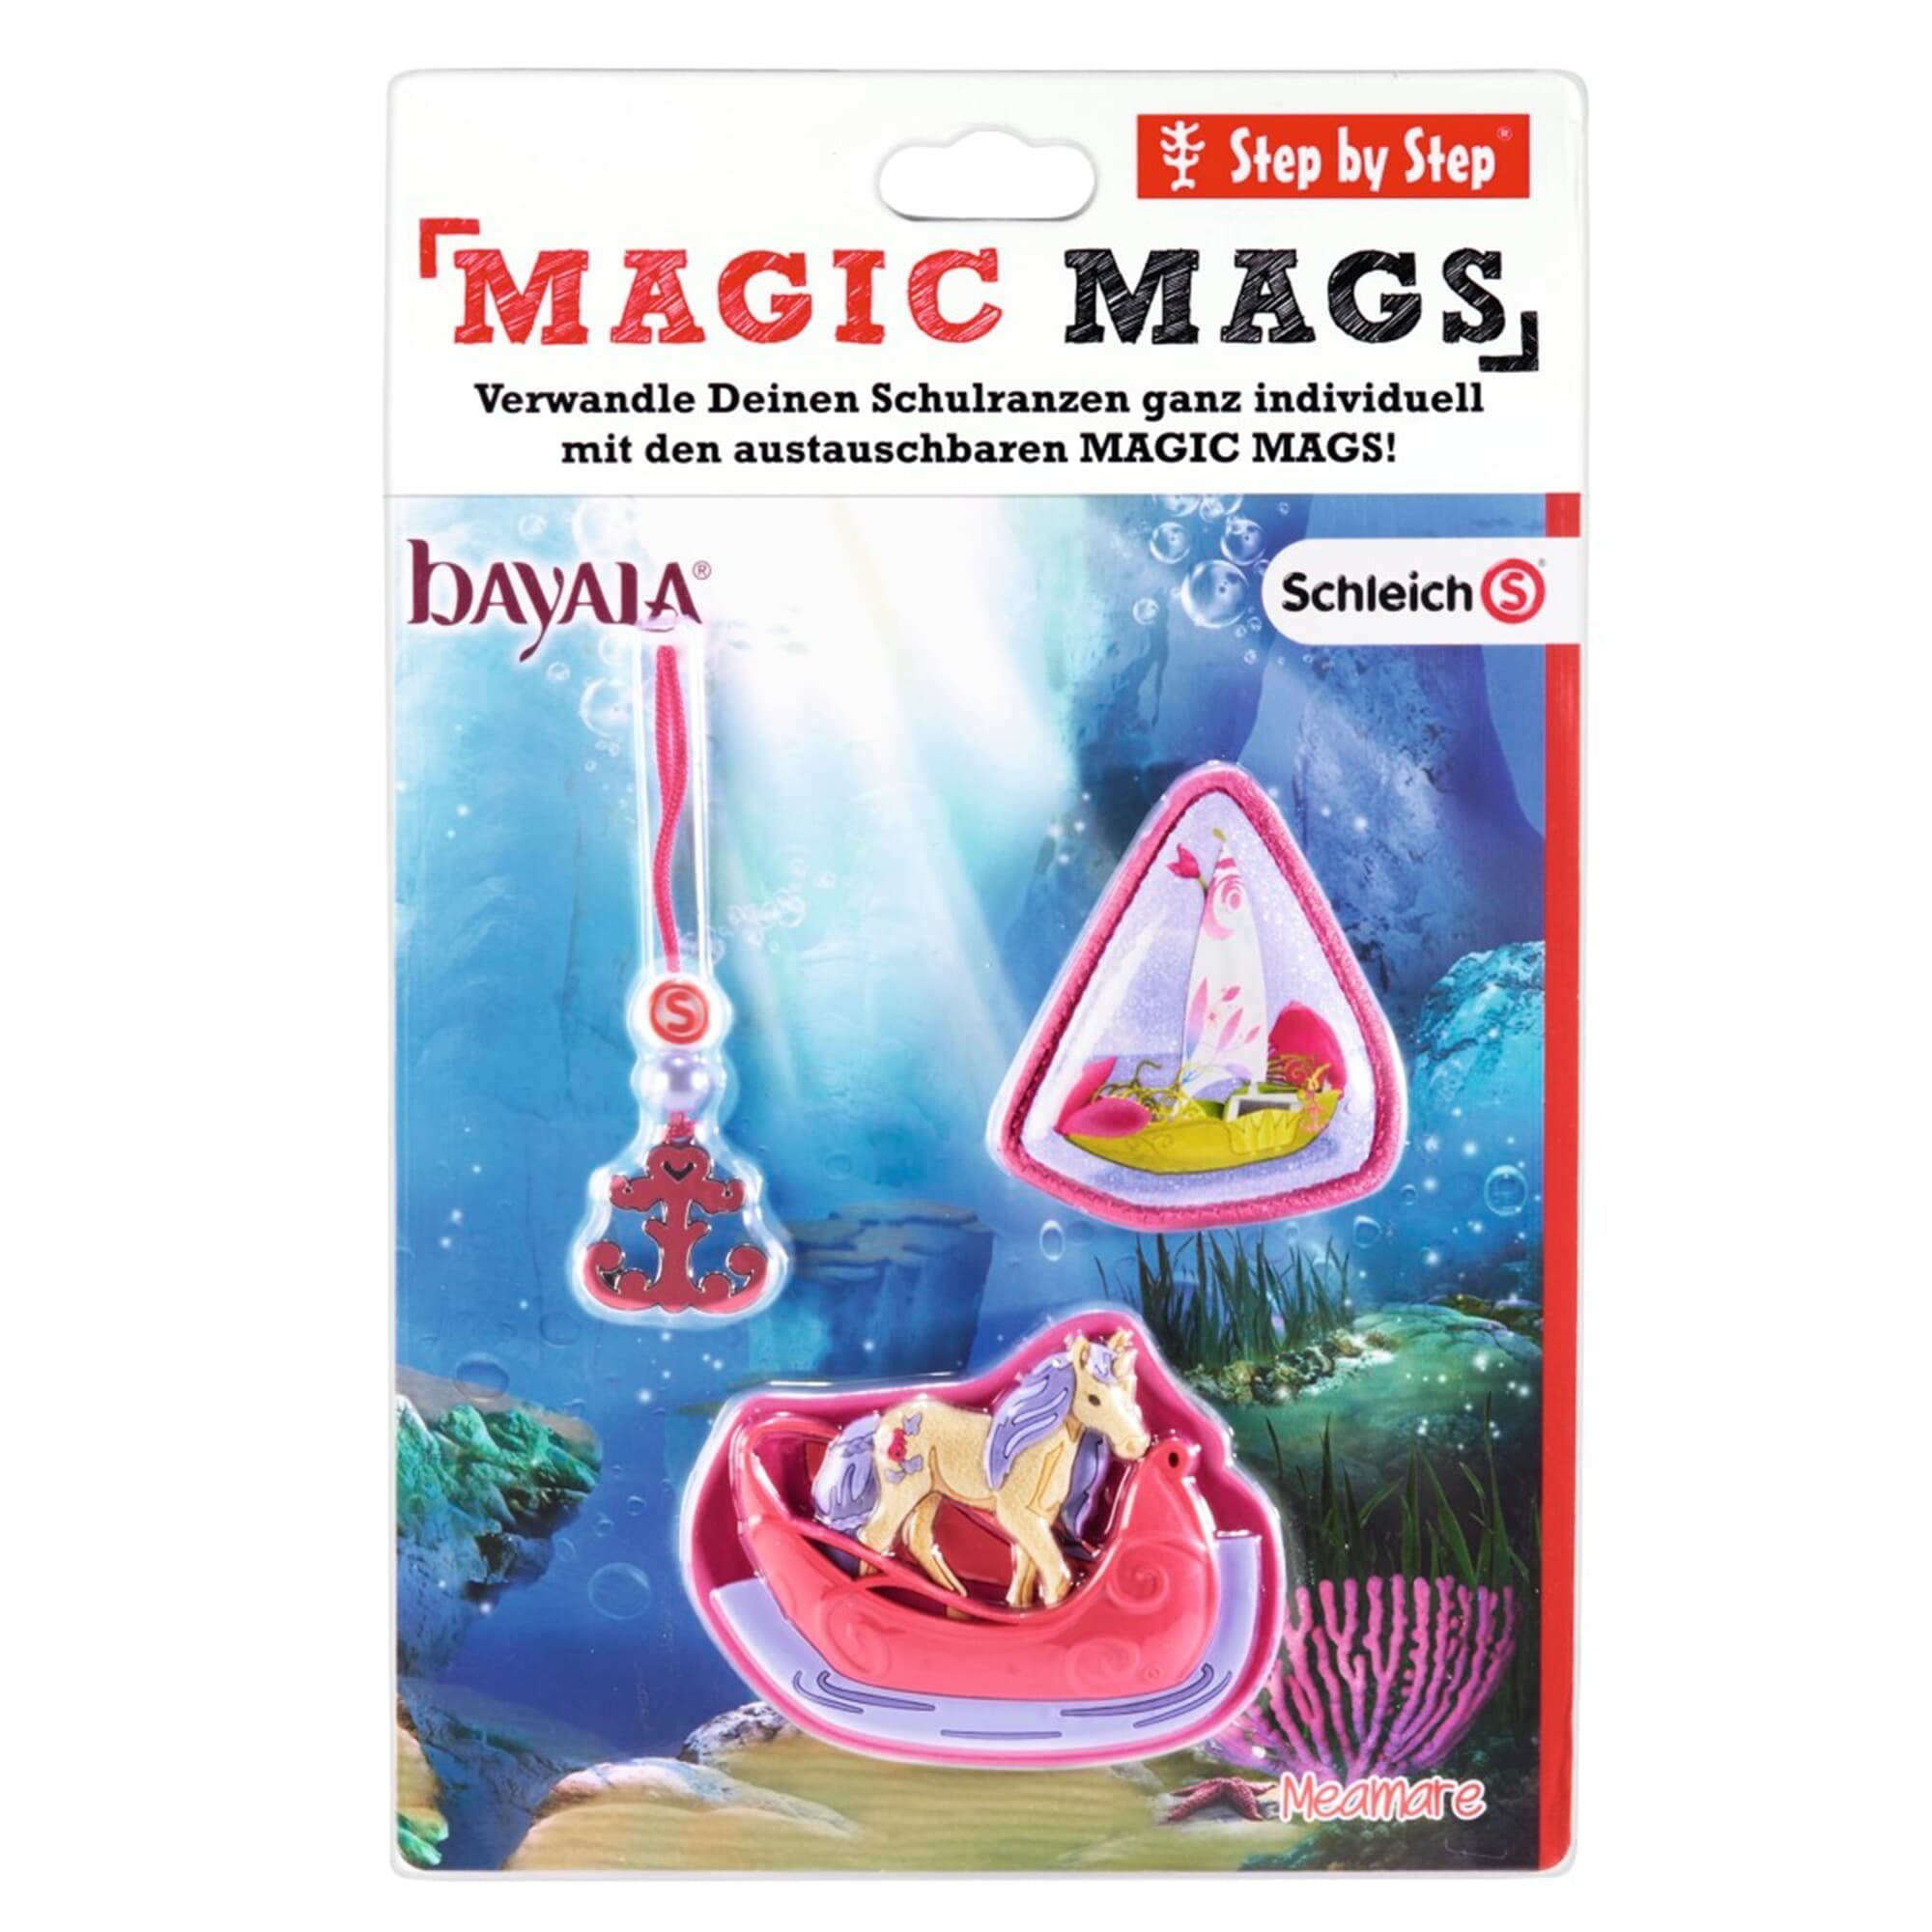 Step by Step Schulranzen MAGIC MAGS bayala®, Meamare